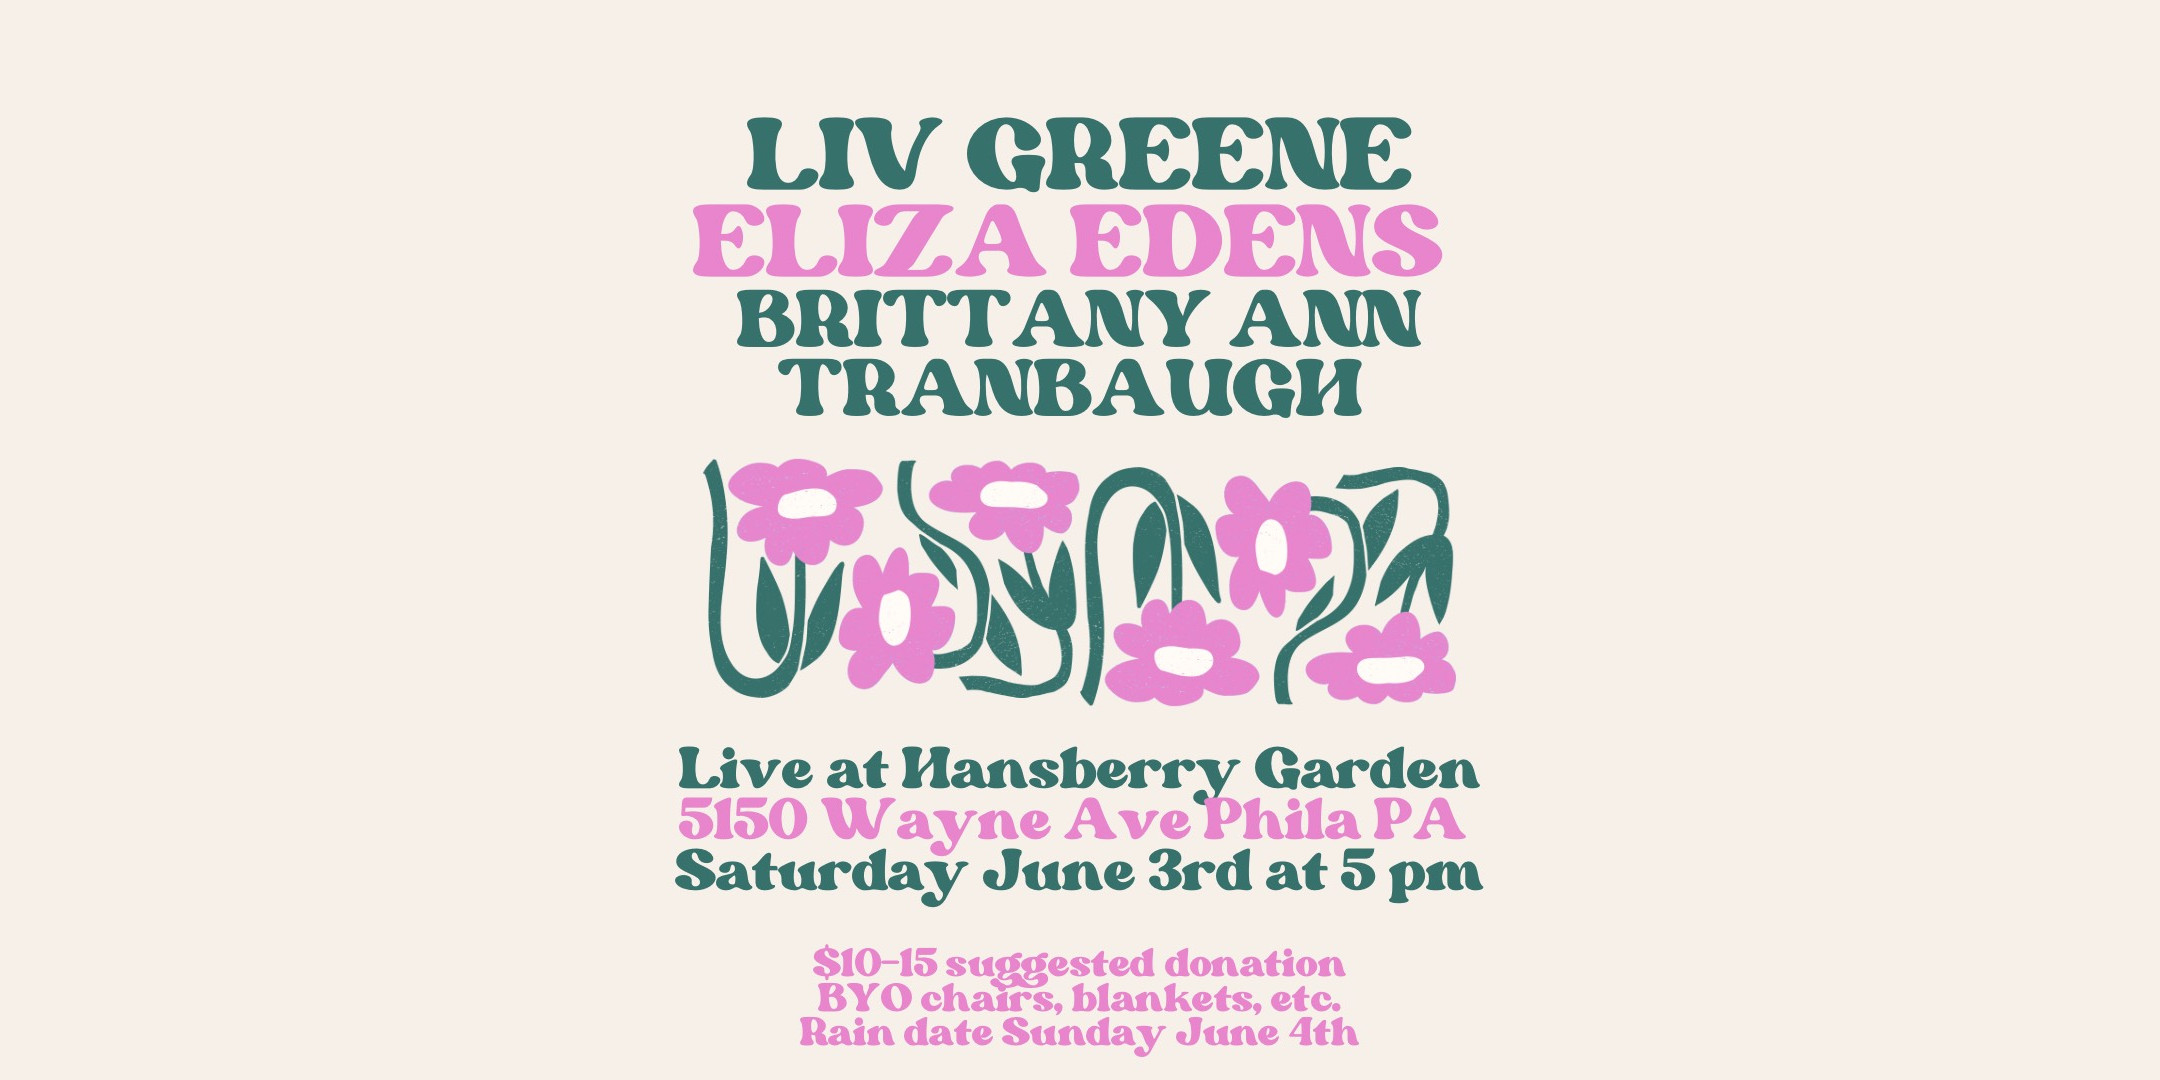 Liv Greene | Eliza Edens | Brittany Ann Tranbaugh | Live at Hansberry Garden | 5150 Wayne Ave. Phila PA | Saturday, June 3 at 5 p.m.